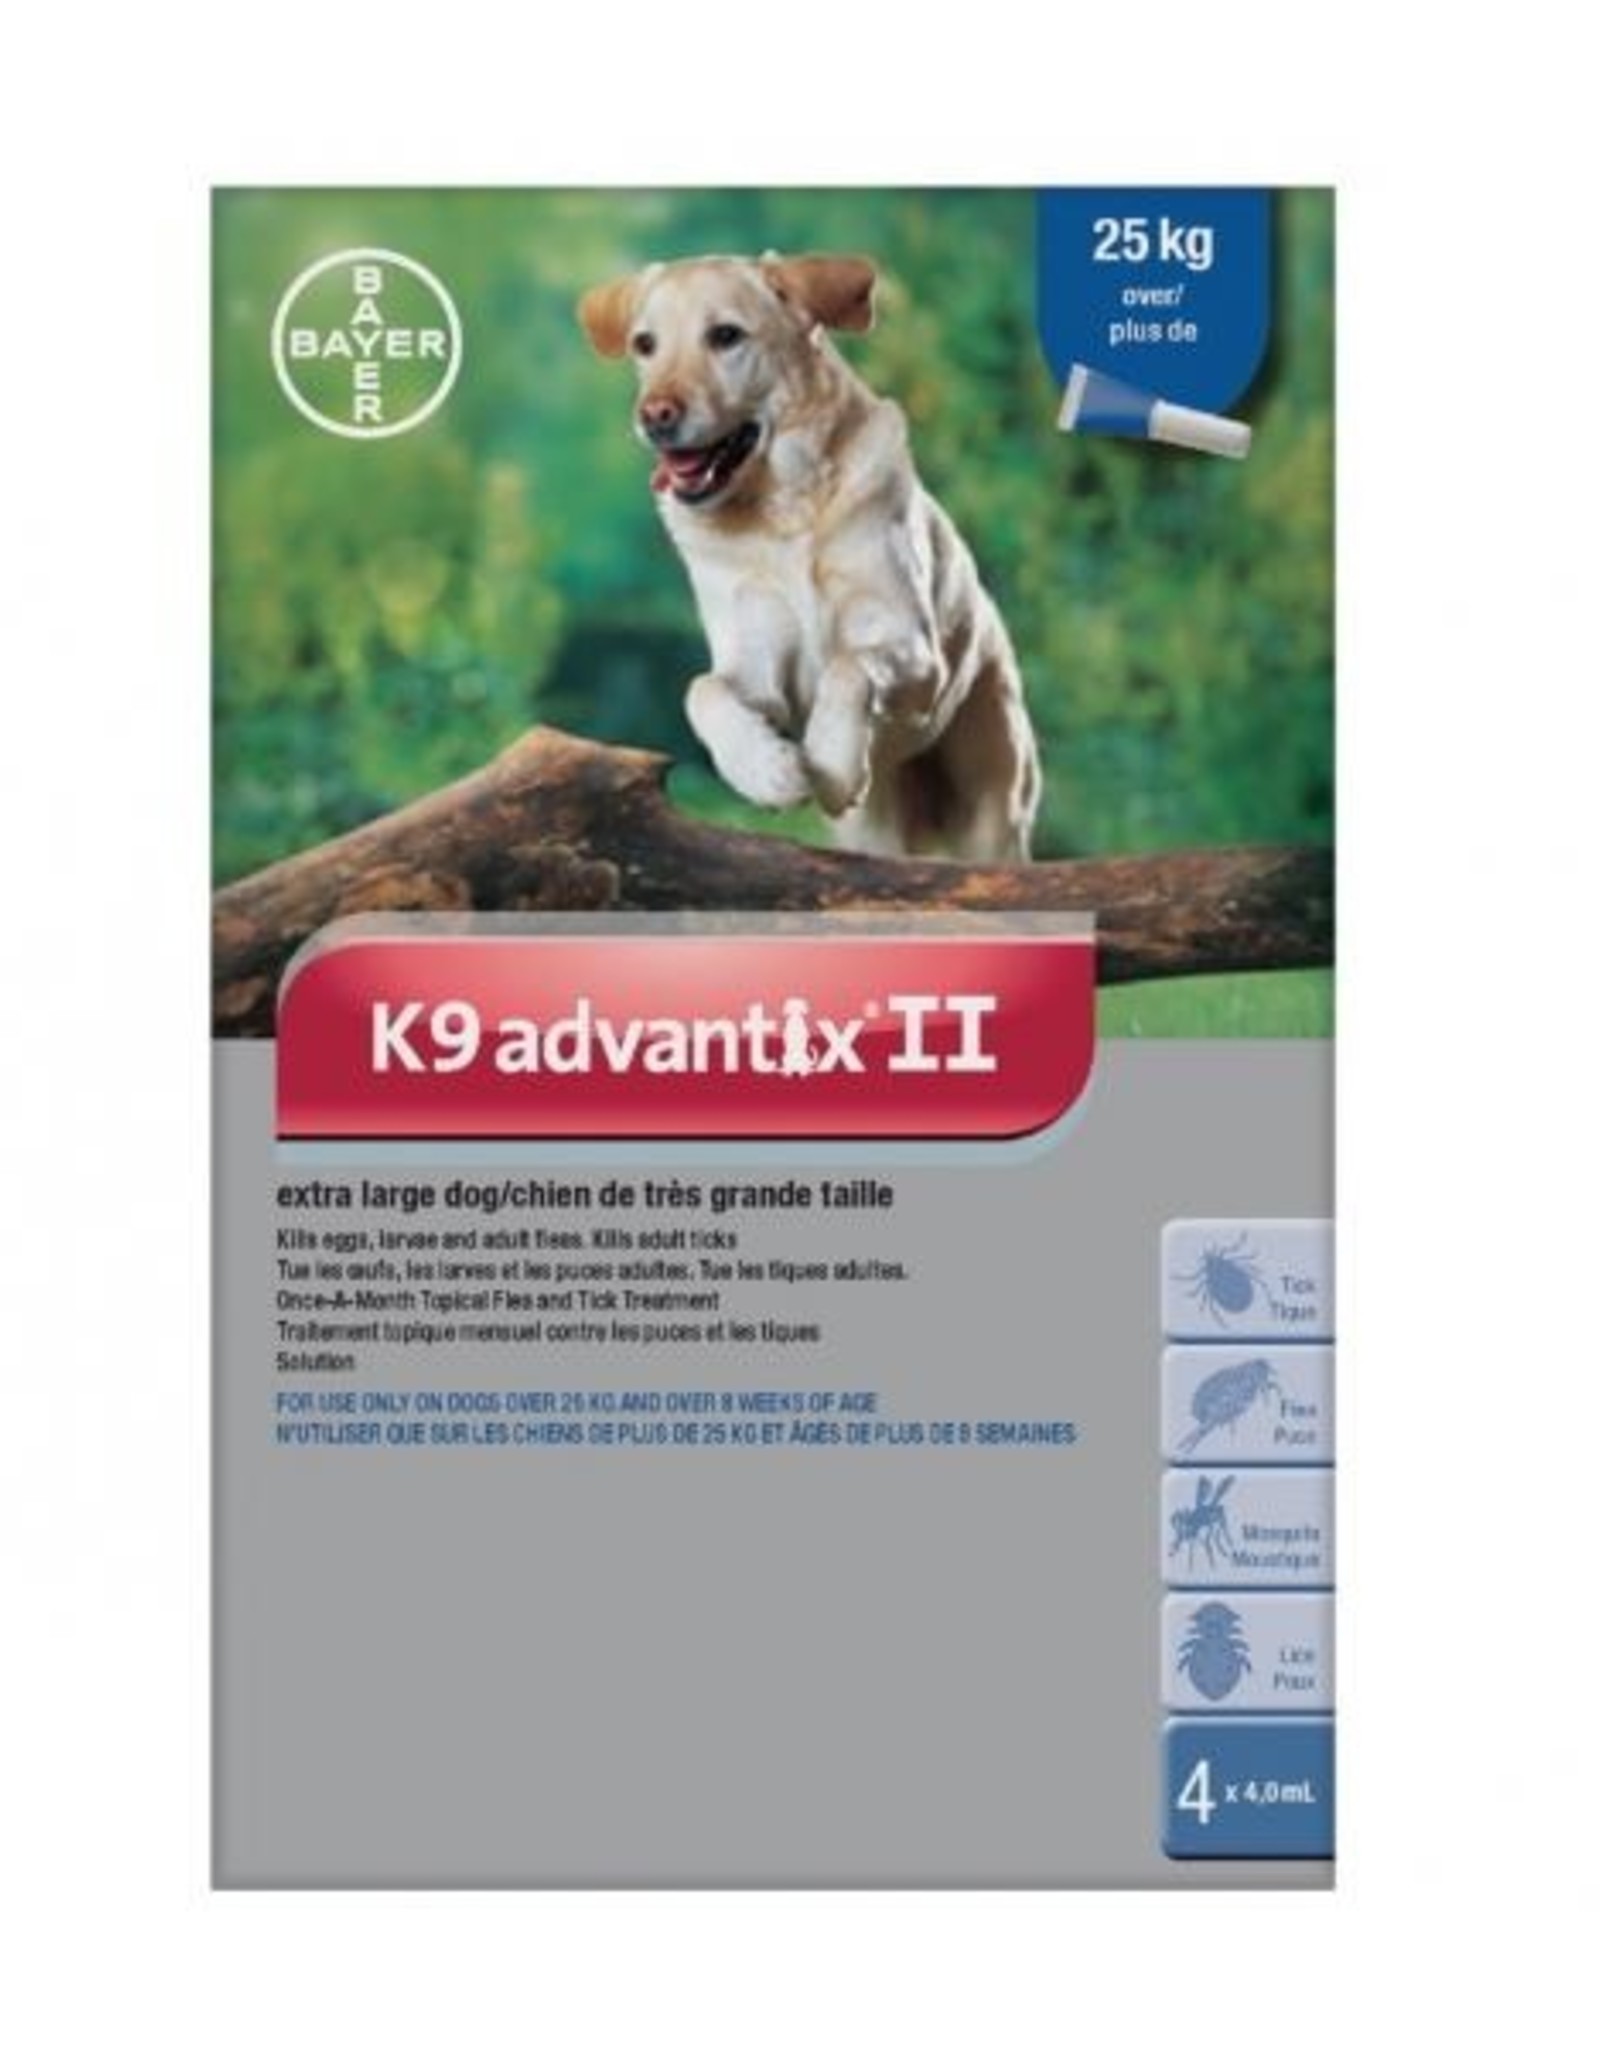 Bayer K9 Advantix II X Dog 4dsx 4.0ml (over 25kg)